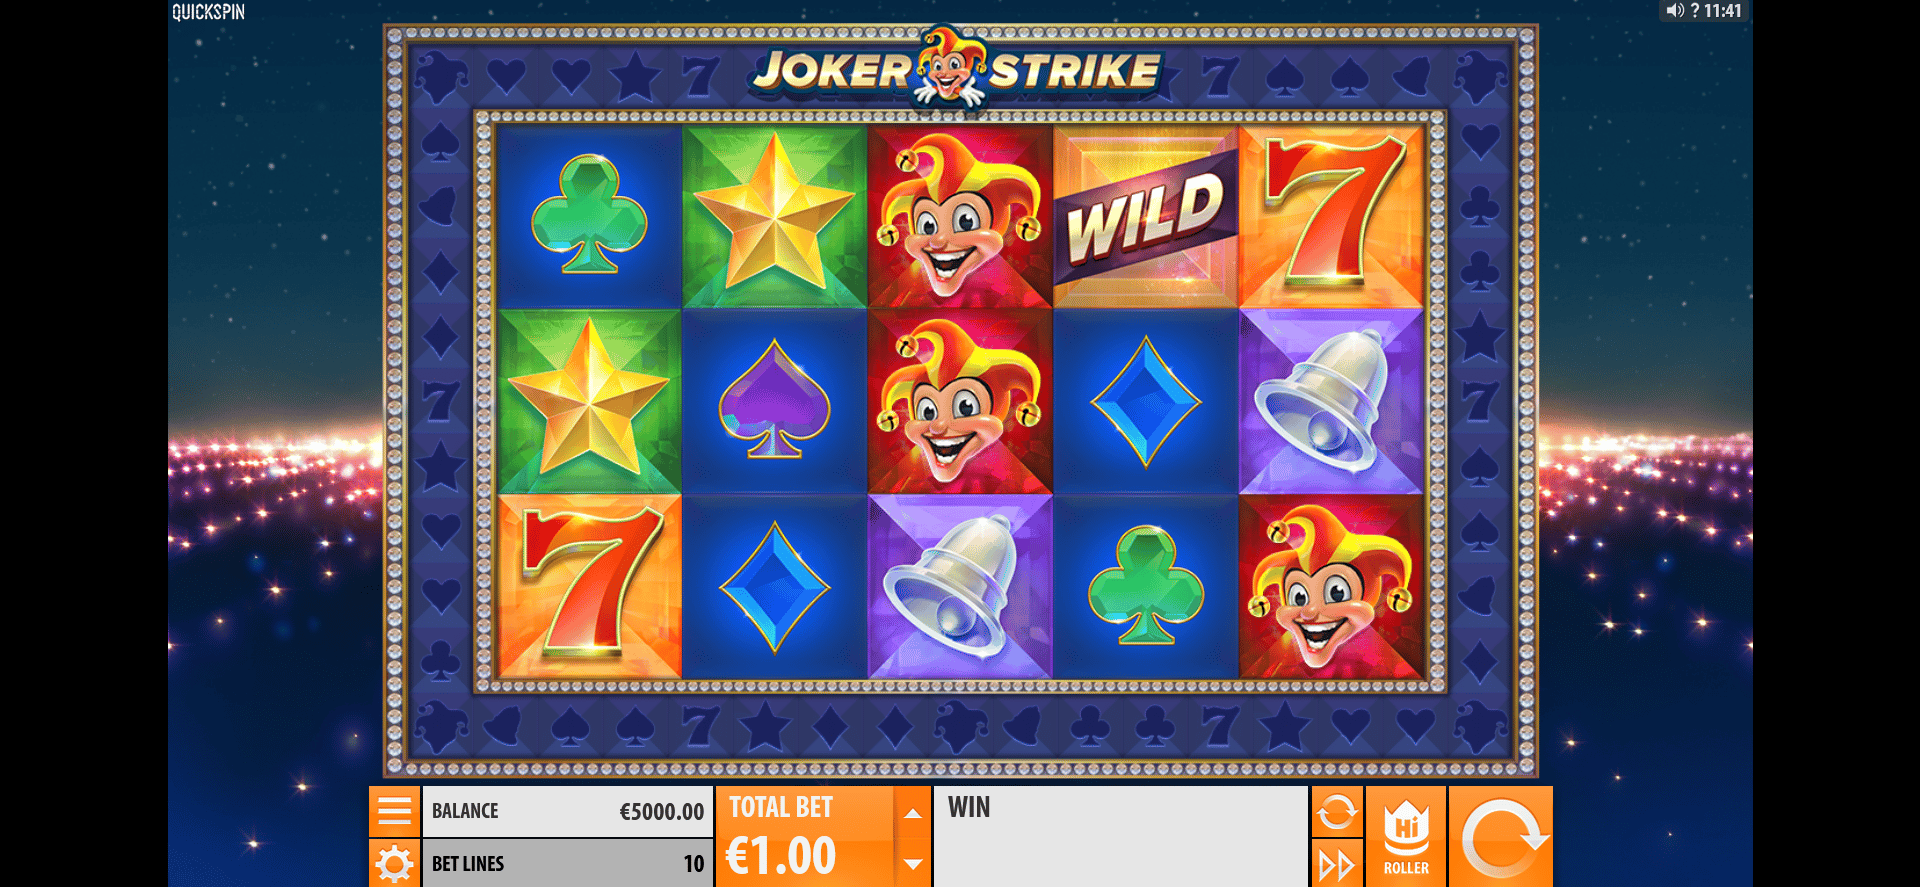 griglia del gioco slot machine joker strike